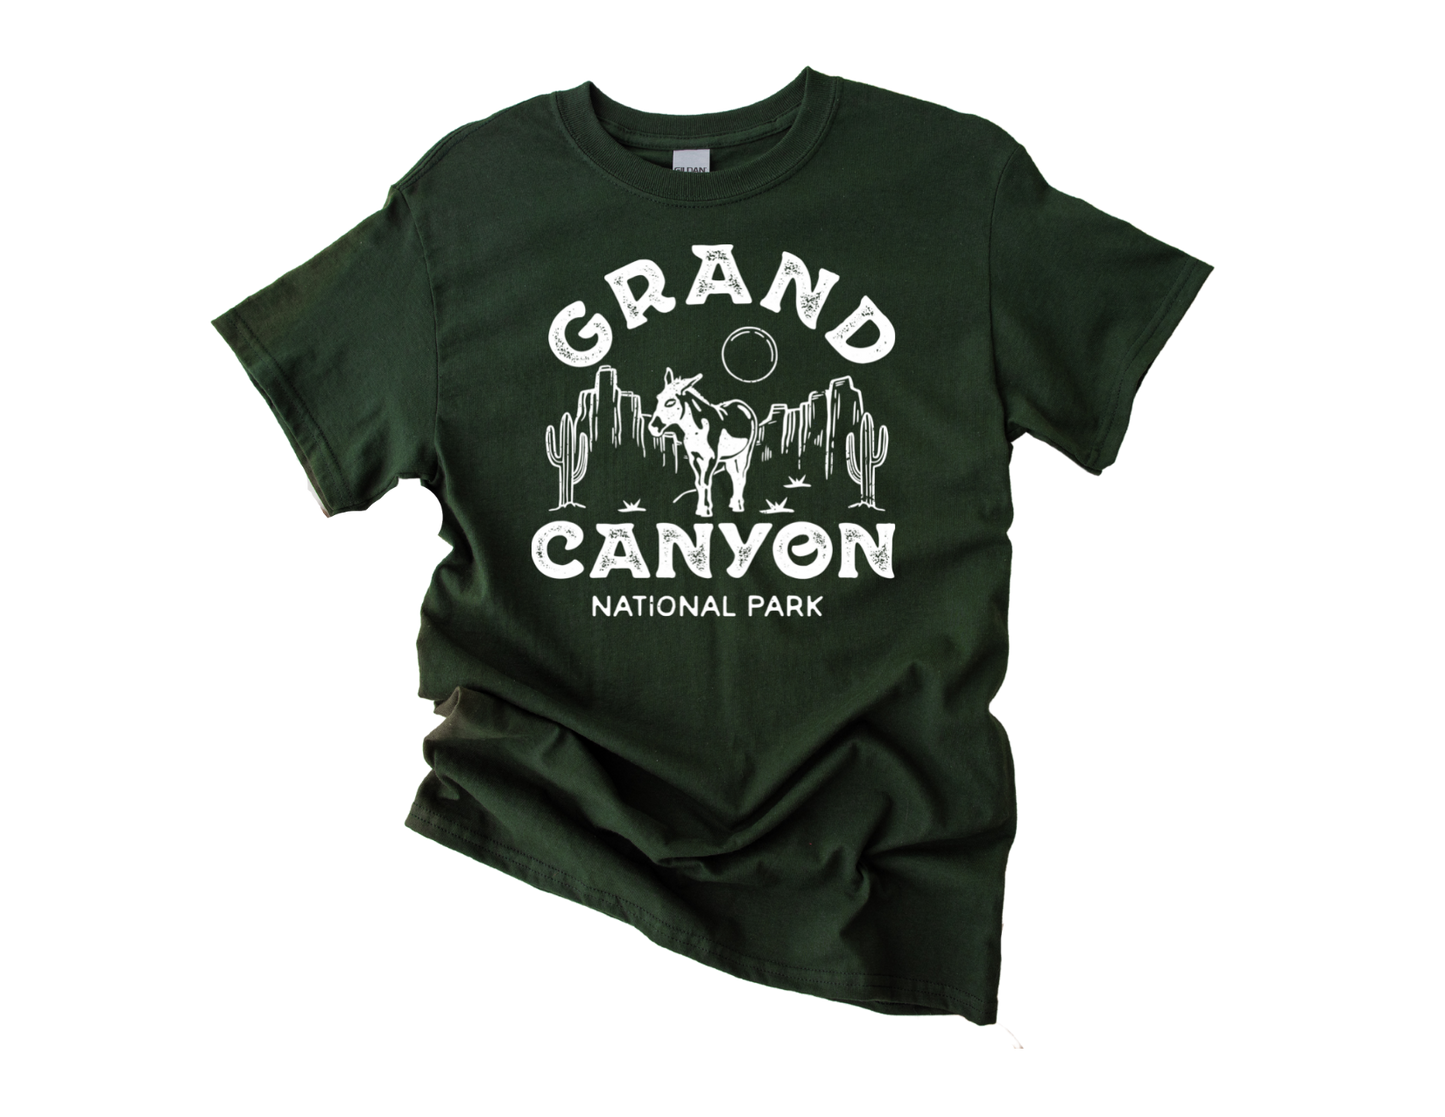 Grand Canyon National Park Unisex T-Shirt